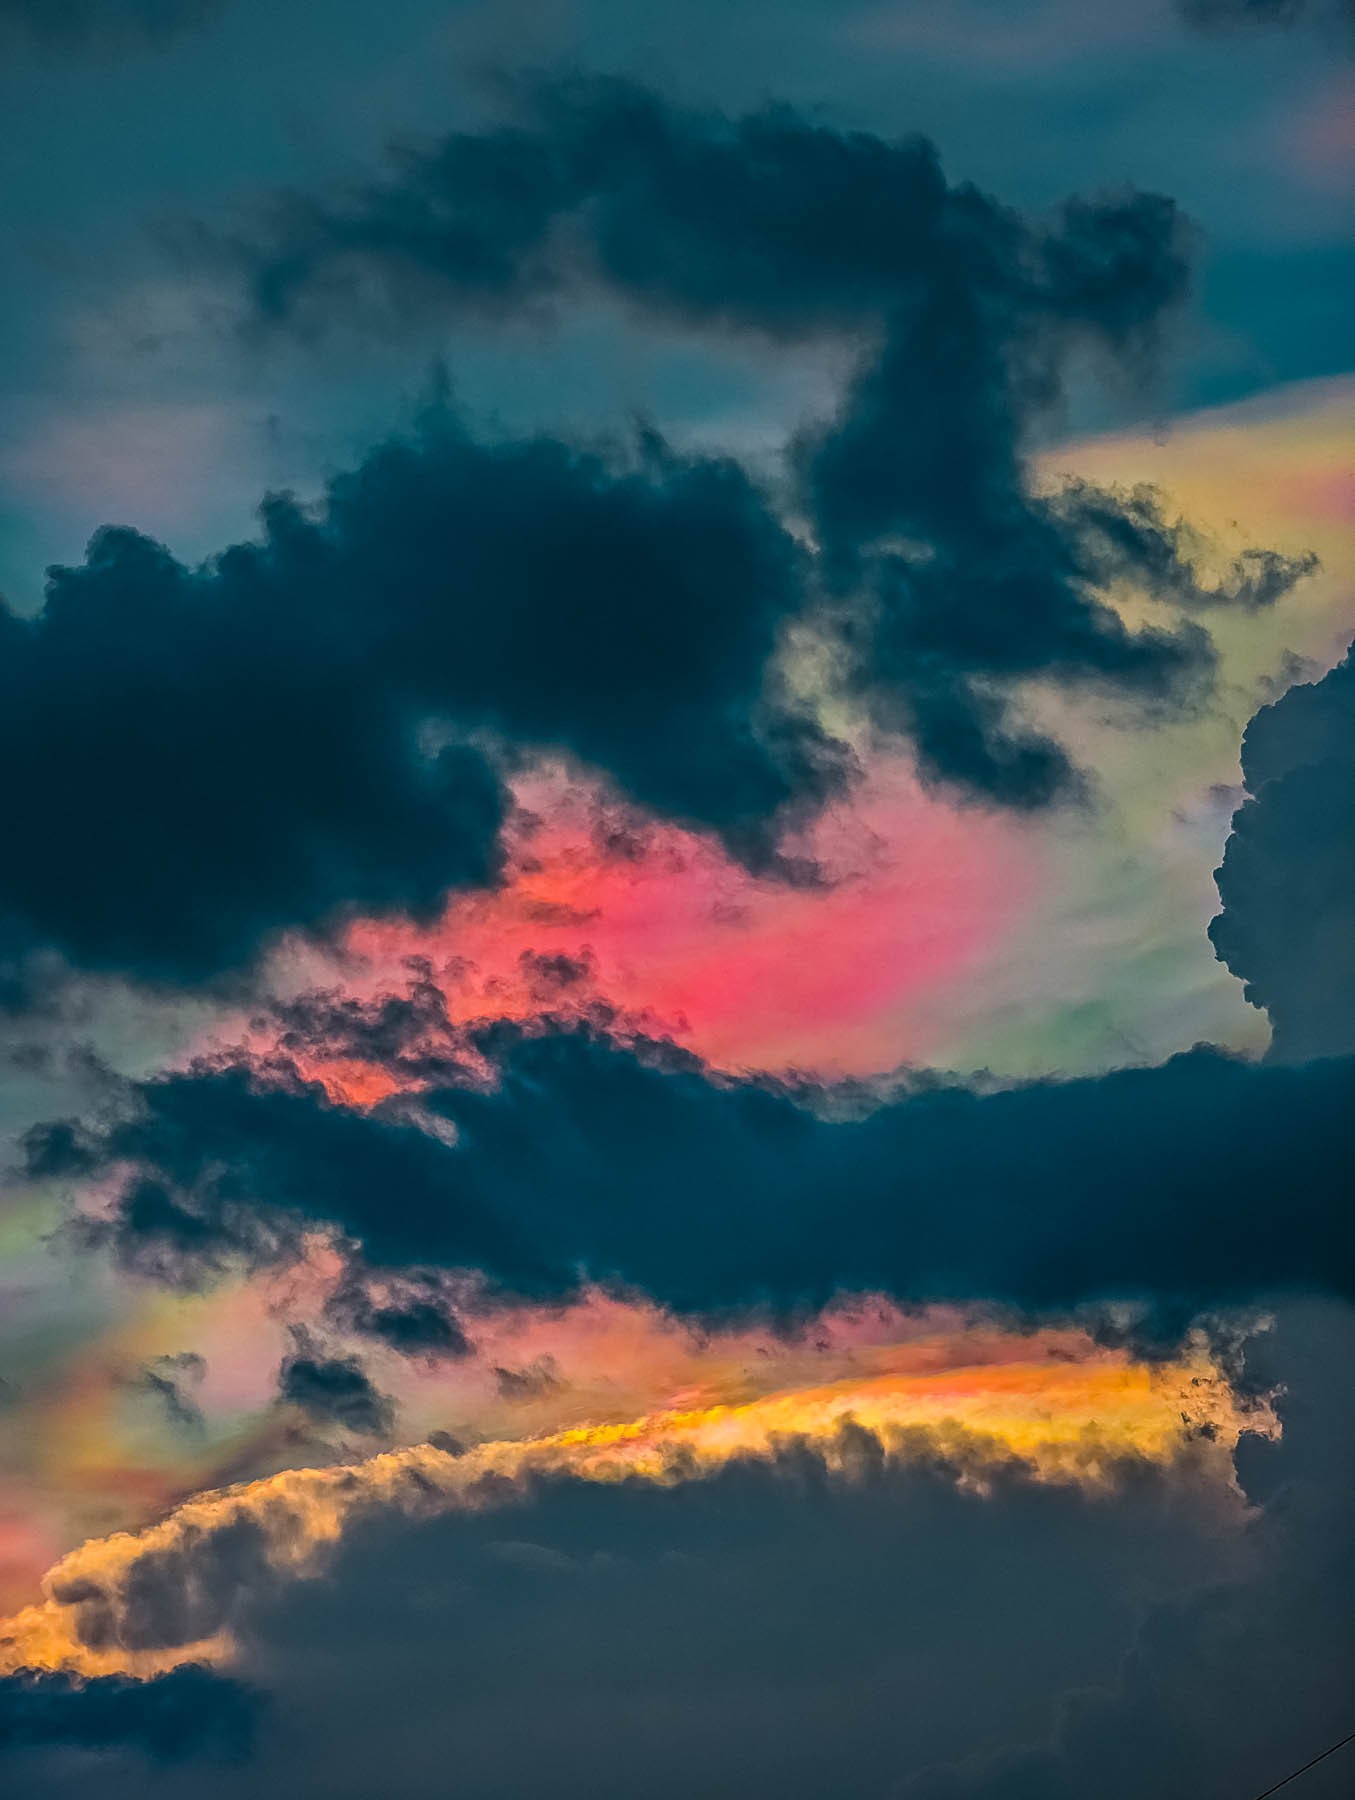 cloud iridescence, iridescent cloud, rainbow cloud, diffractive cloud, sunset, jaisalmer, rajasthan, india, sky phenomenon, rain, monsoon, thunderstorm, eyesfordestinations, eyesforrajasthan, travel photographer, travel blogger, naina redhu, naina.co